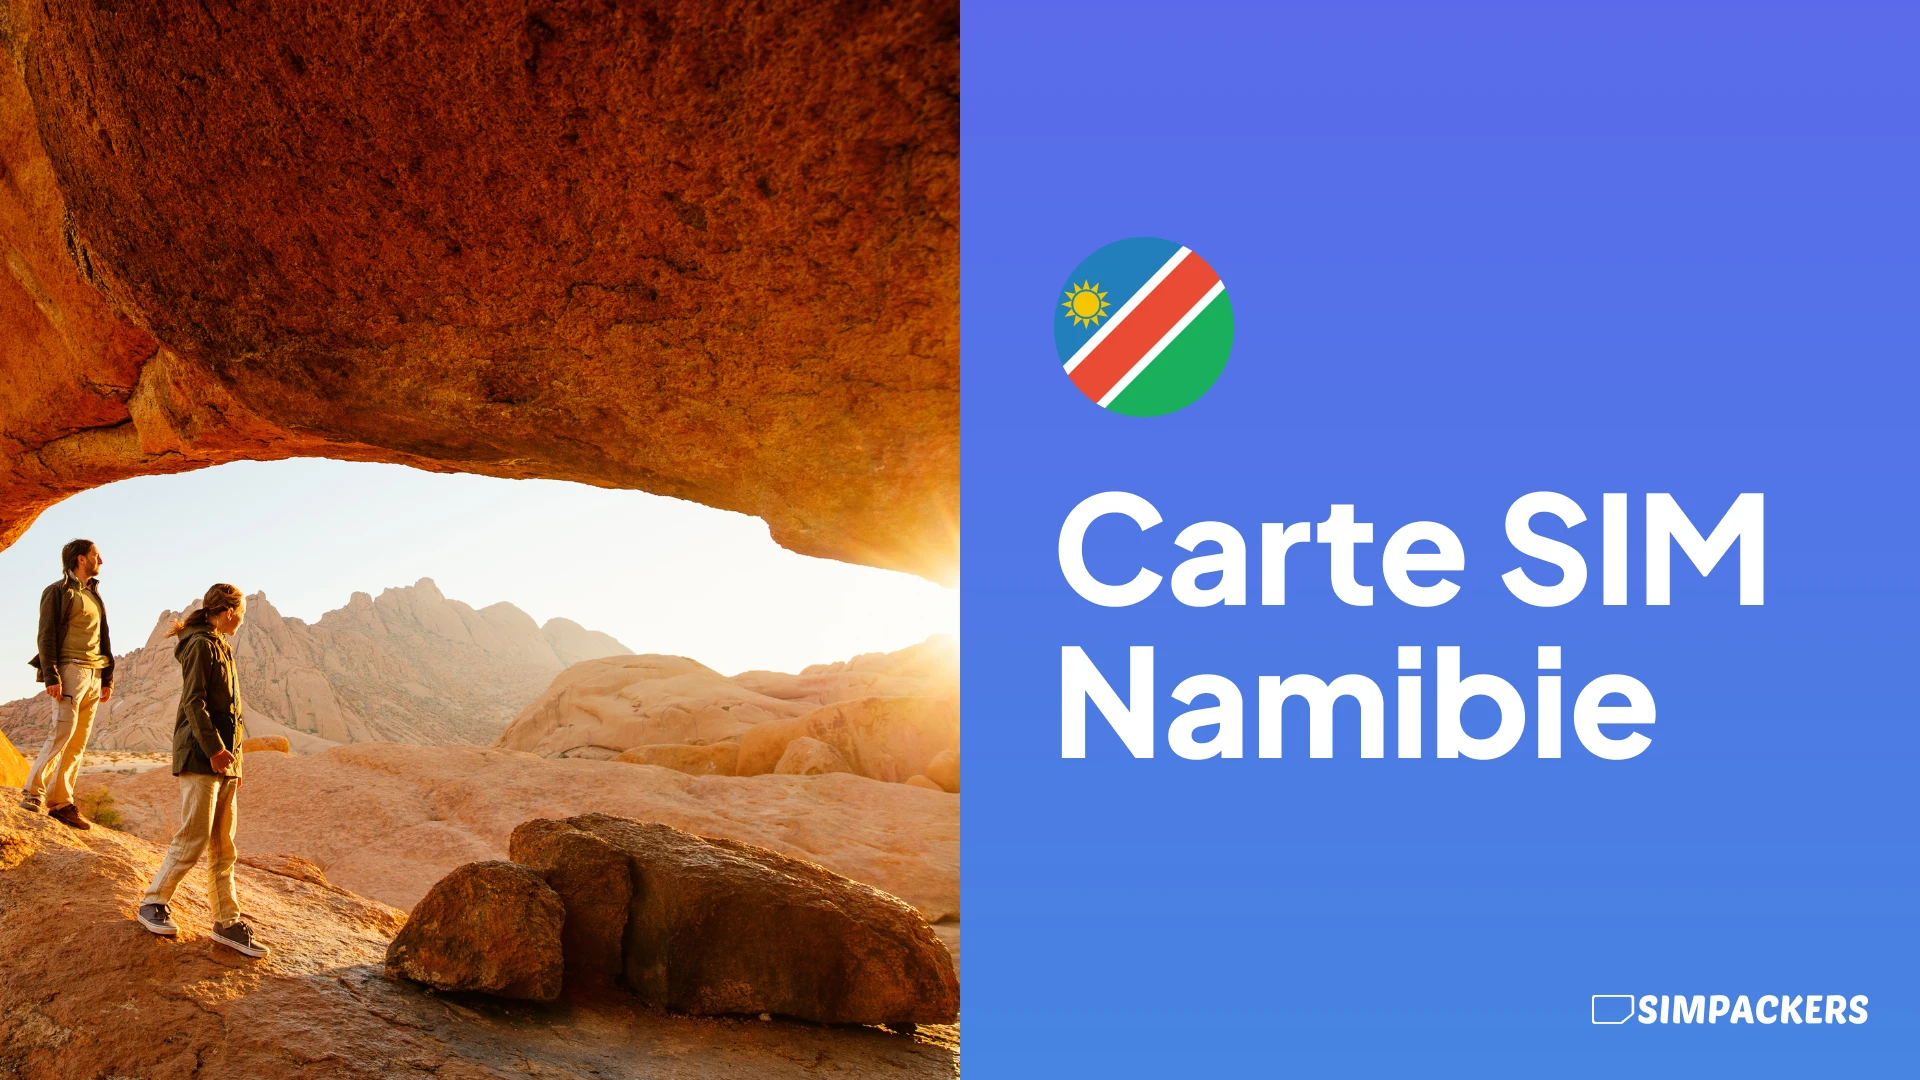 FR/FEATURED_IMAGES/carte-sim-namibie.webp